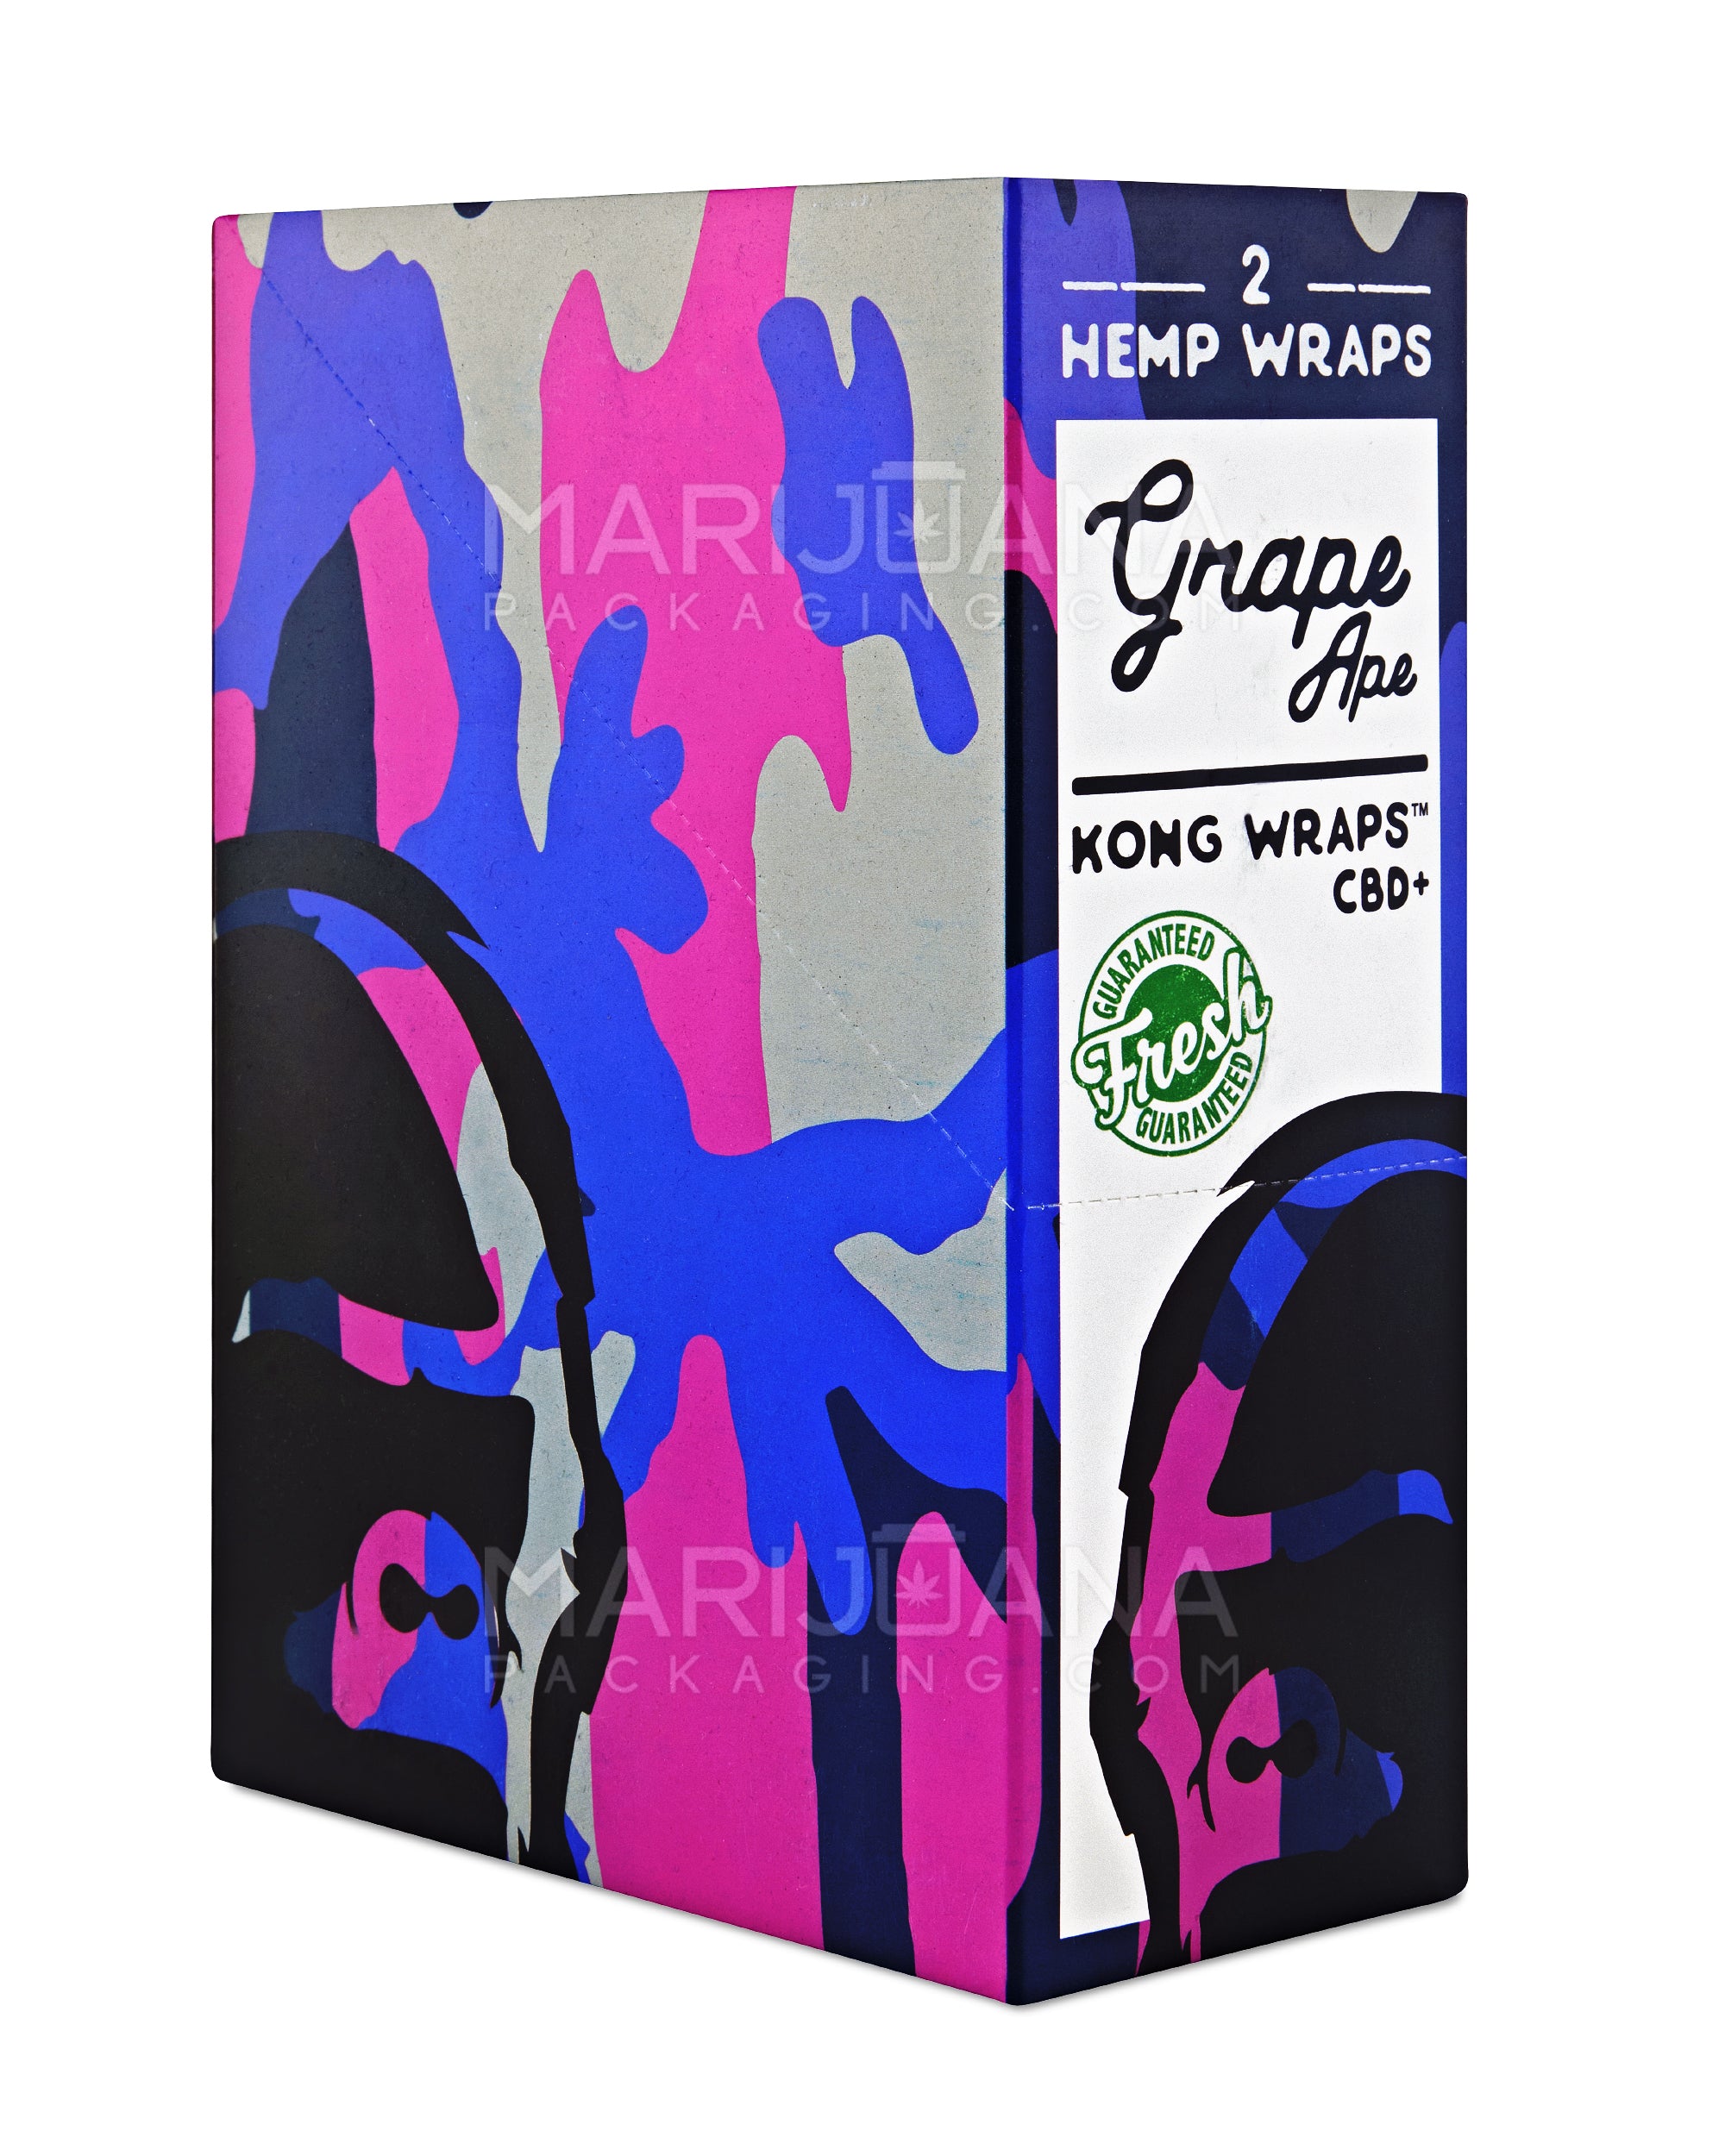 KONG WRAPS | 'Retail Display' Organic Hemp Blunt Wraps | CBD Infused - Grape Ape - 25 Count